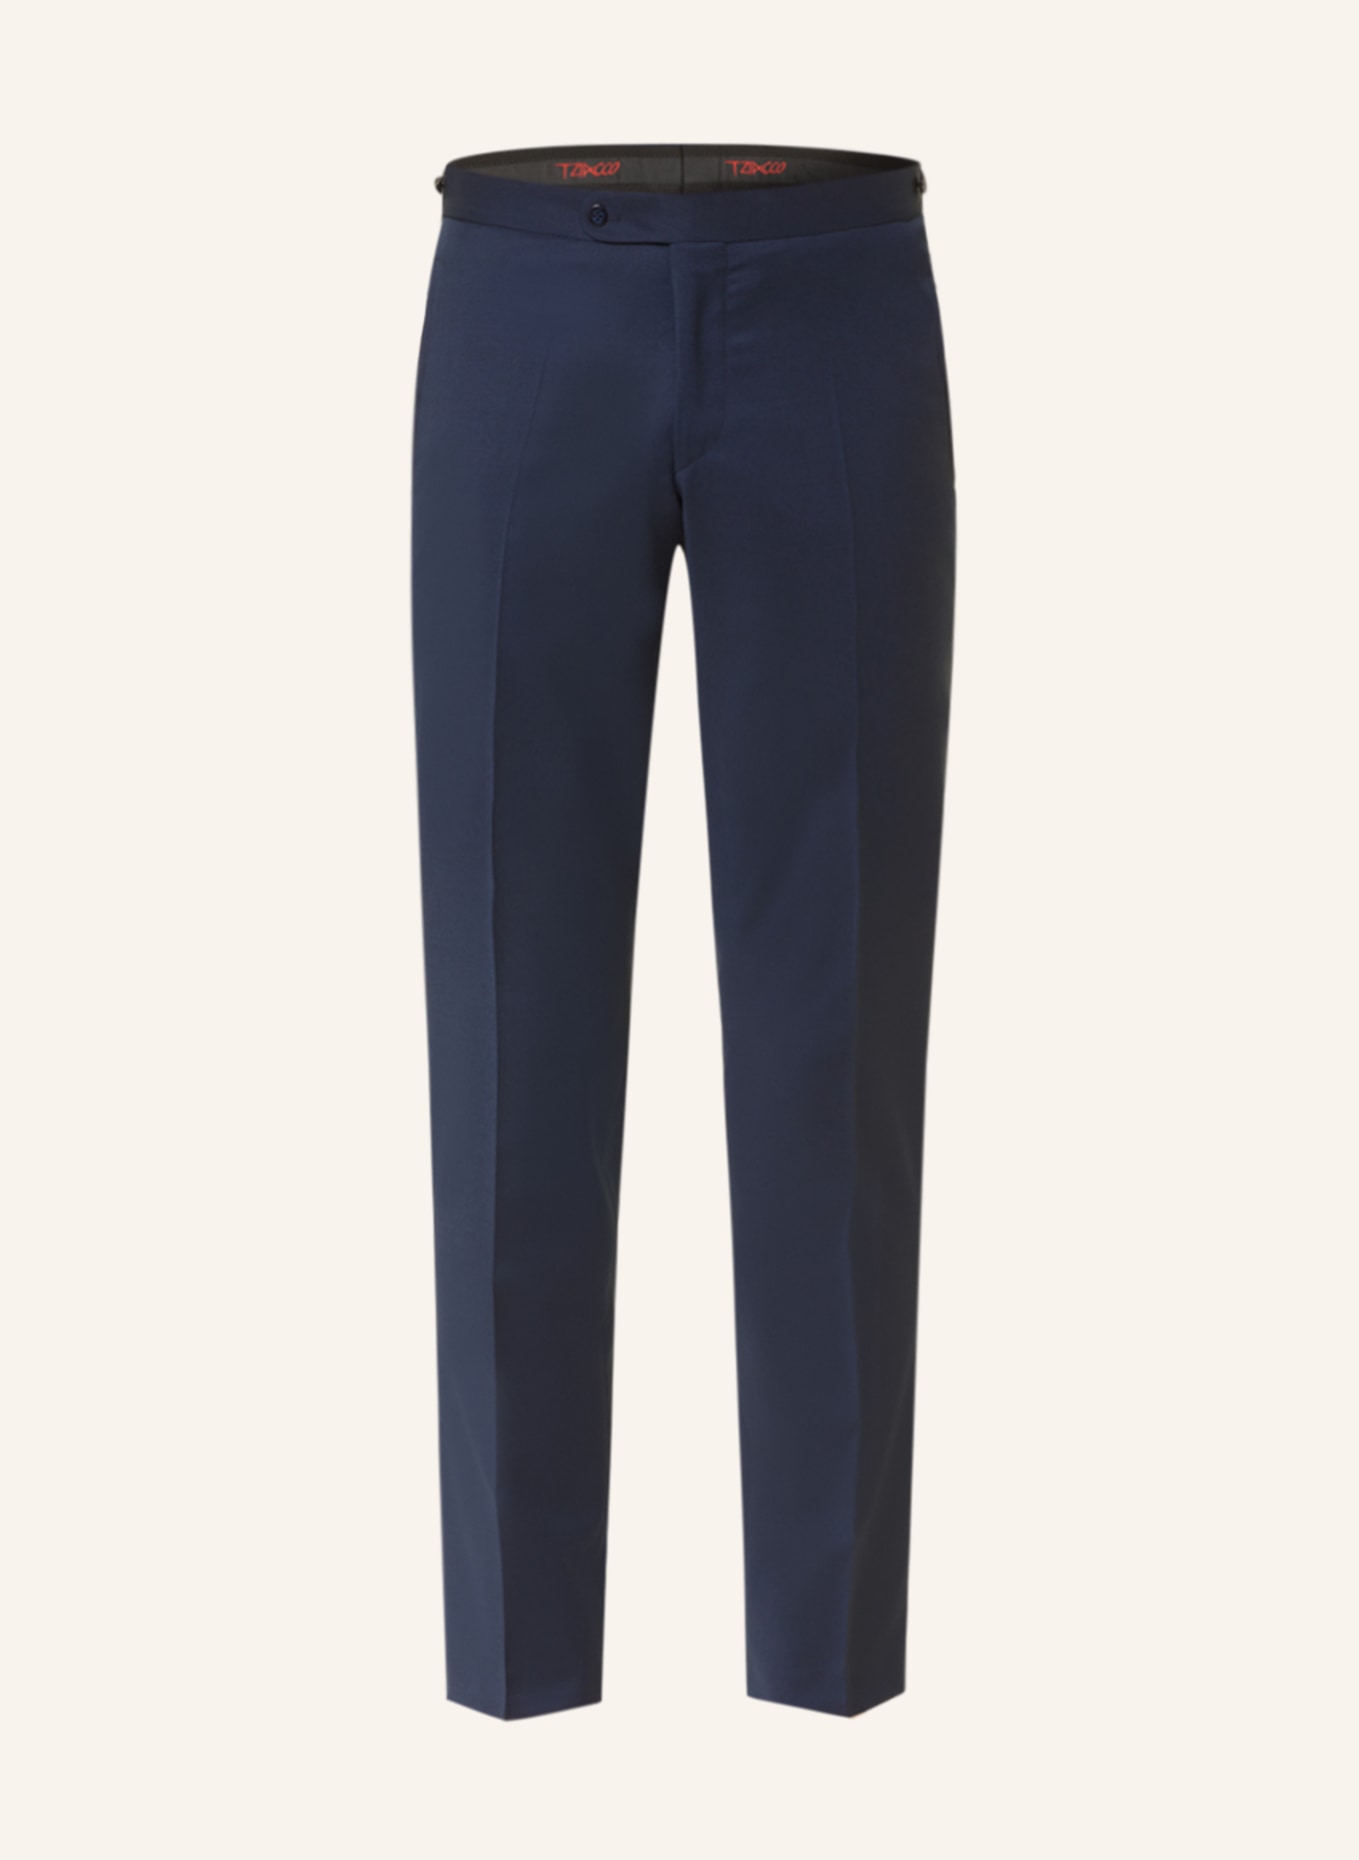 WILVORST Anzughose Slim Fit, Farbe: DUNKELBLAU (Bild 1)